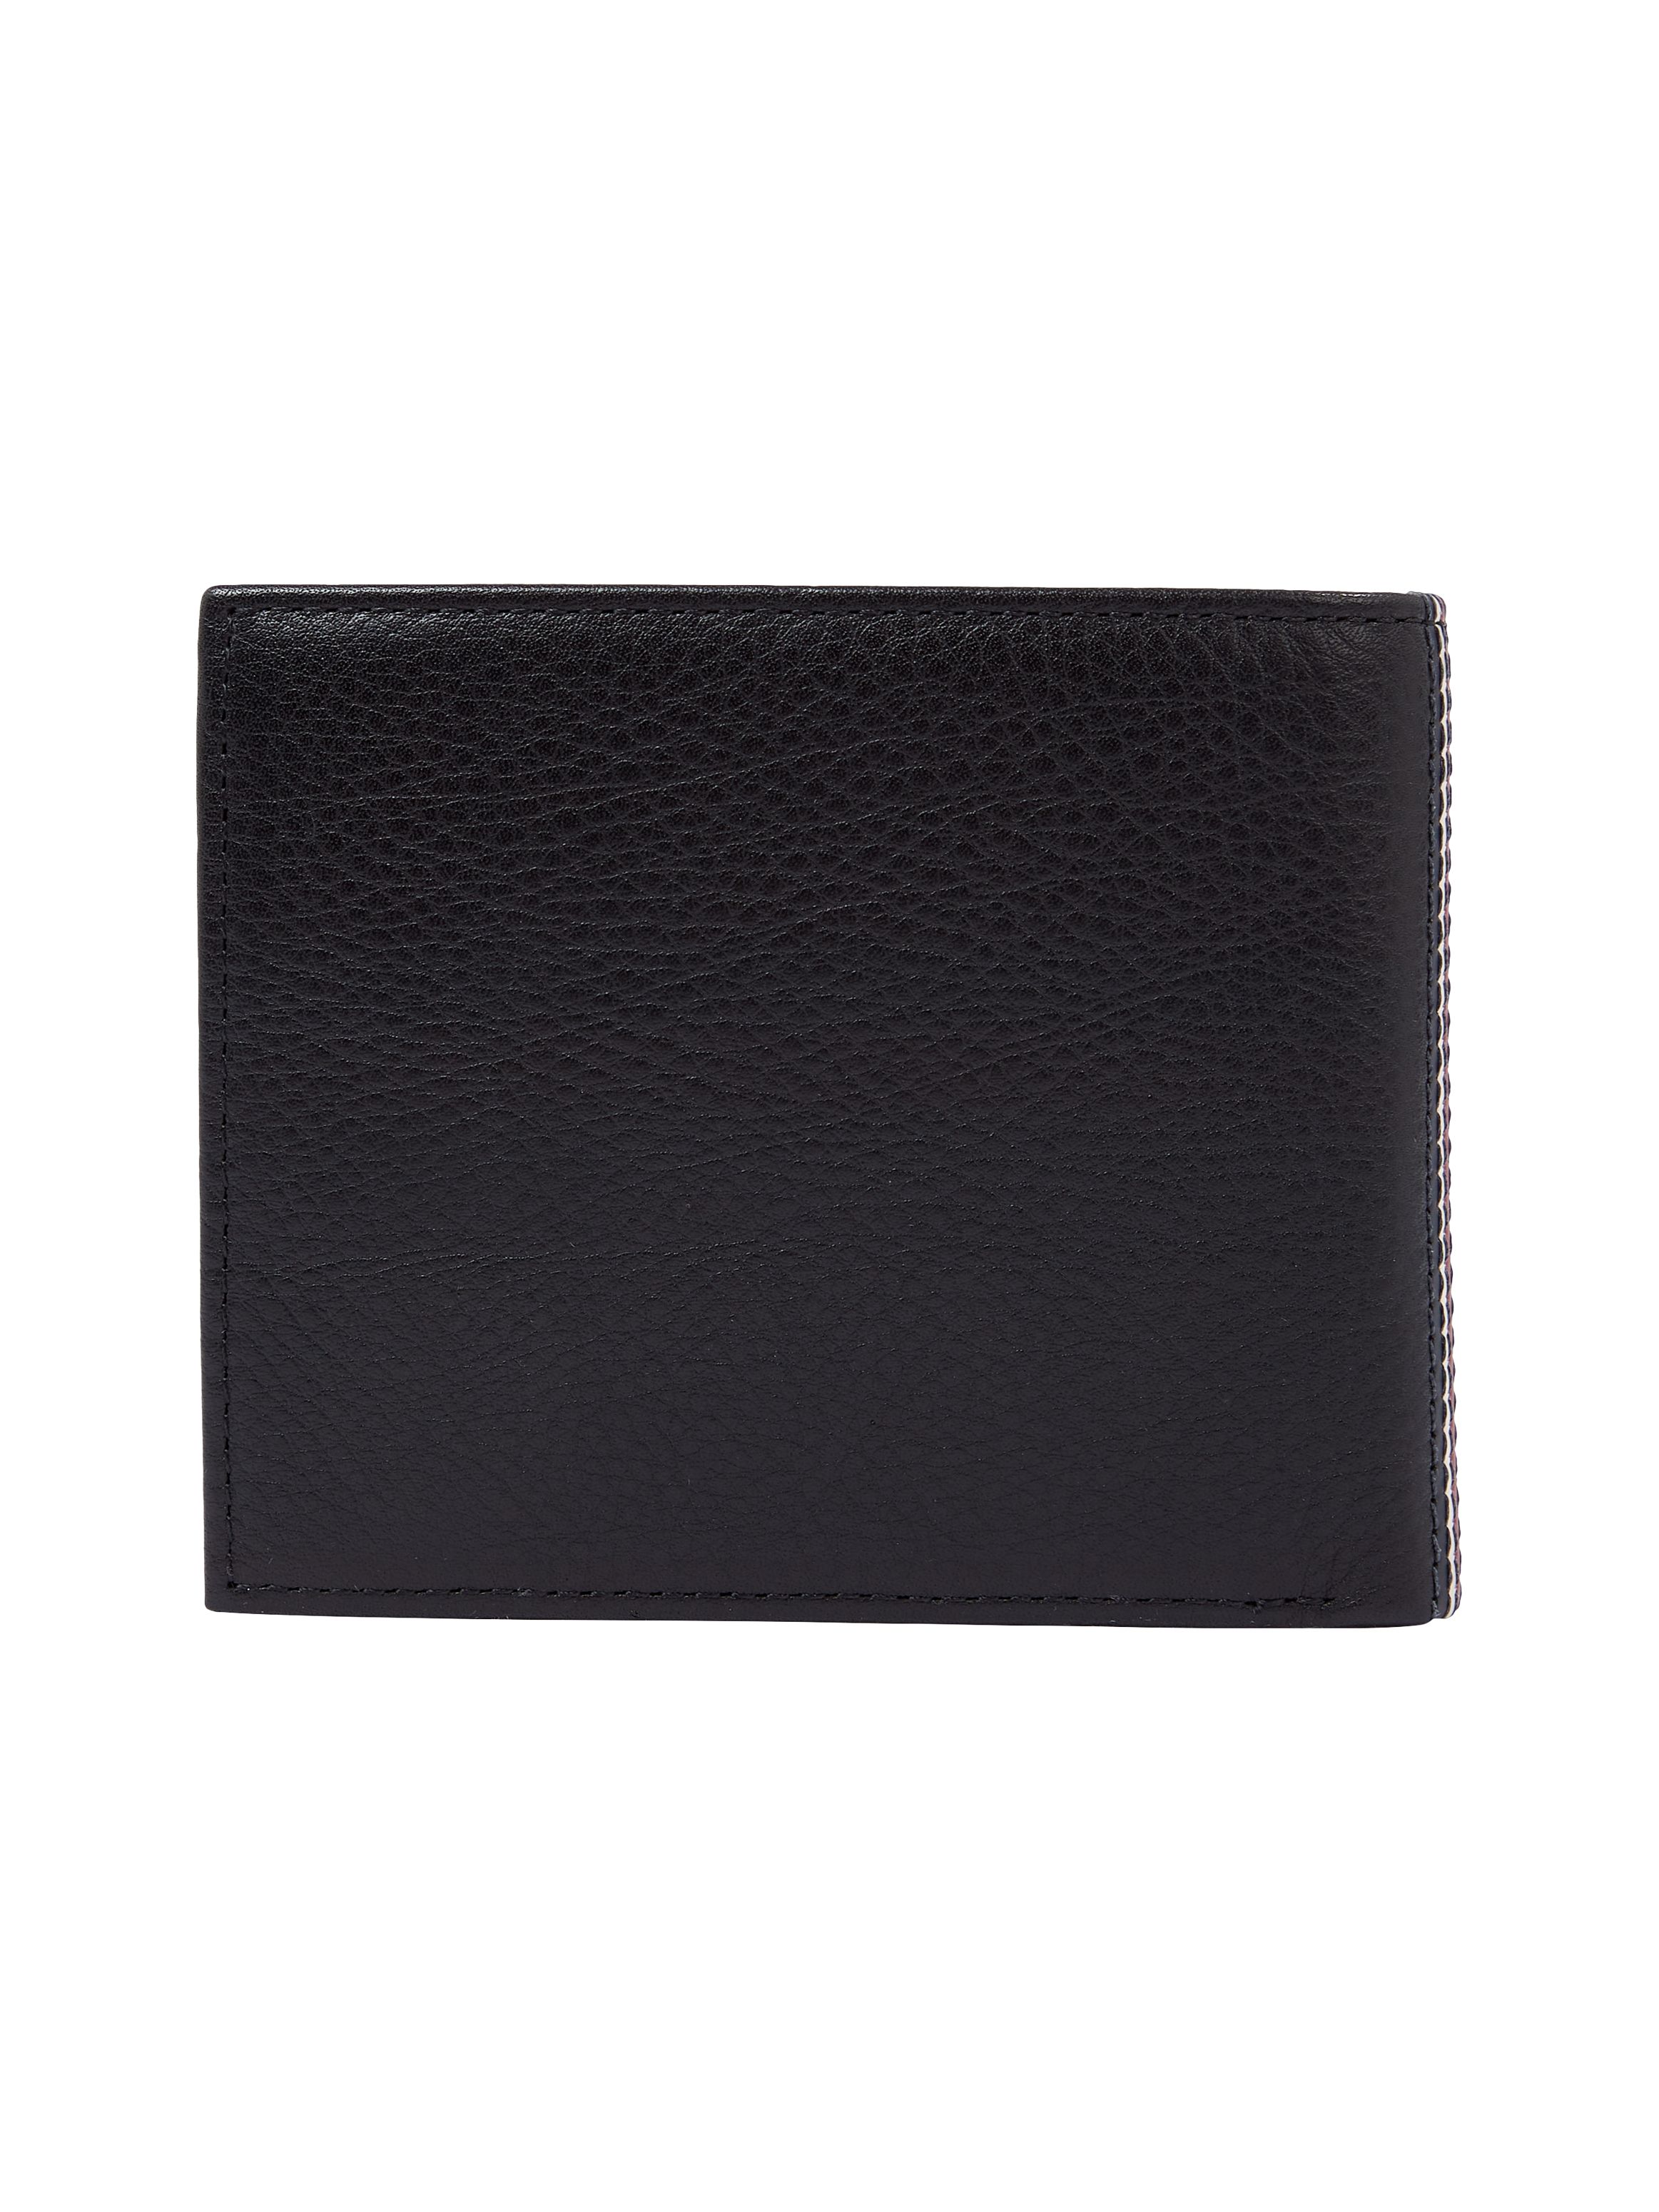 Tommy Hilfiger Premium Leather Bifold Credit Card Holder